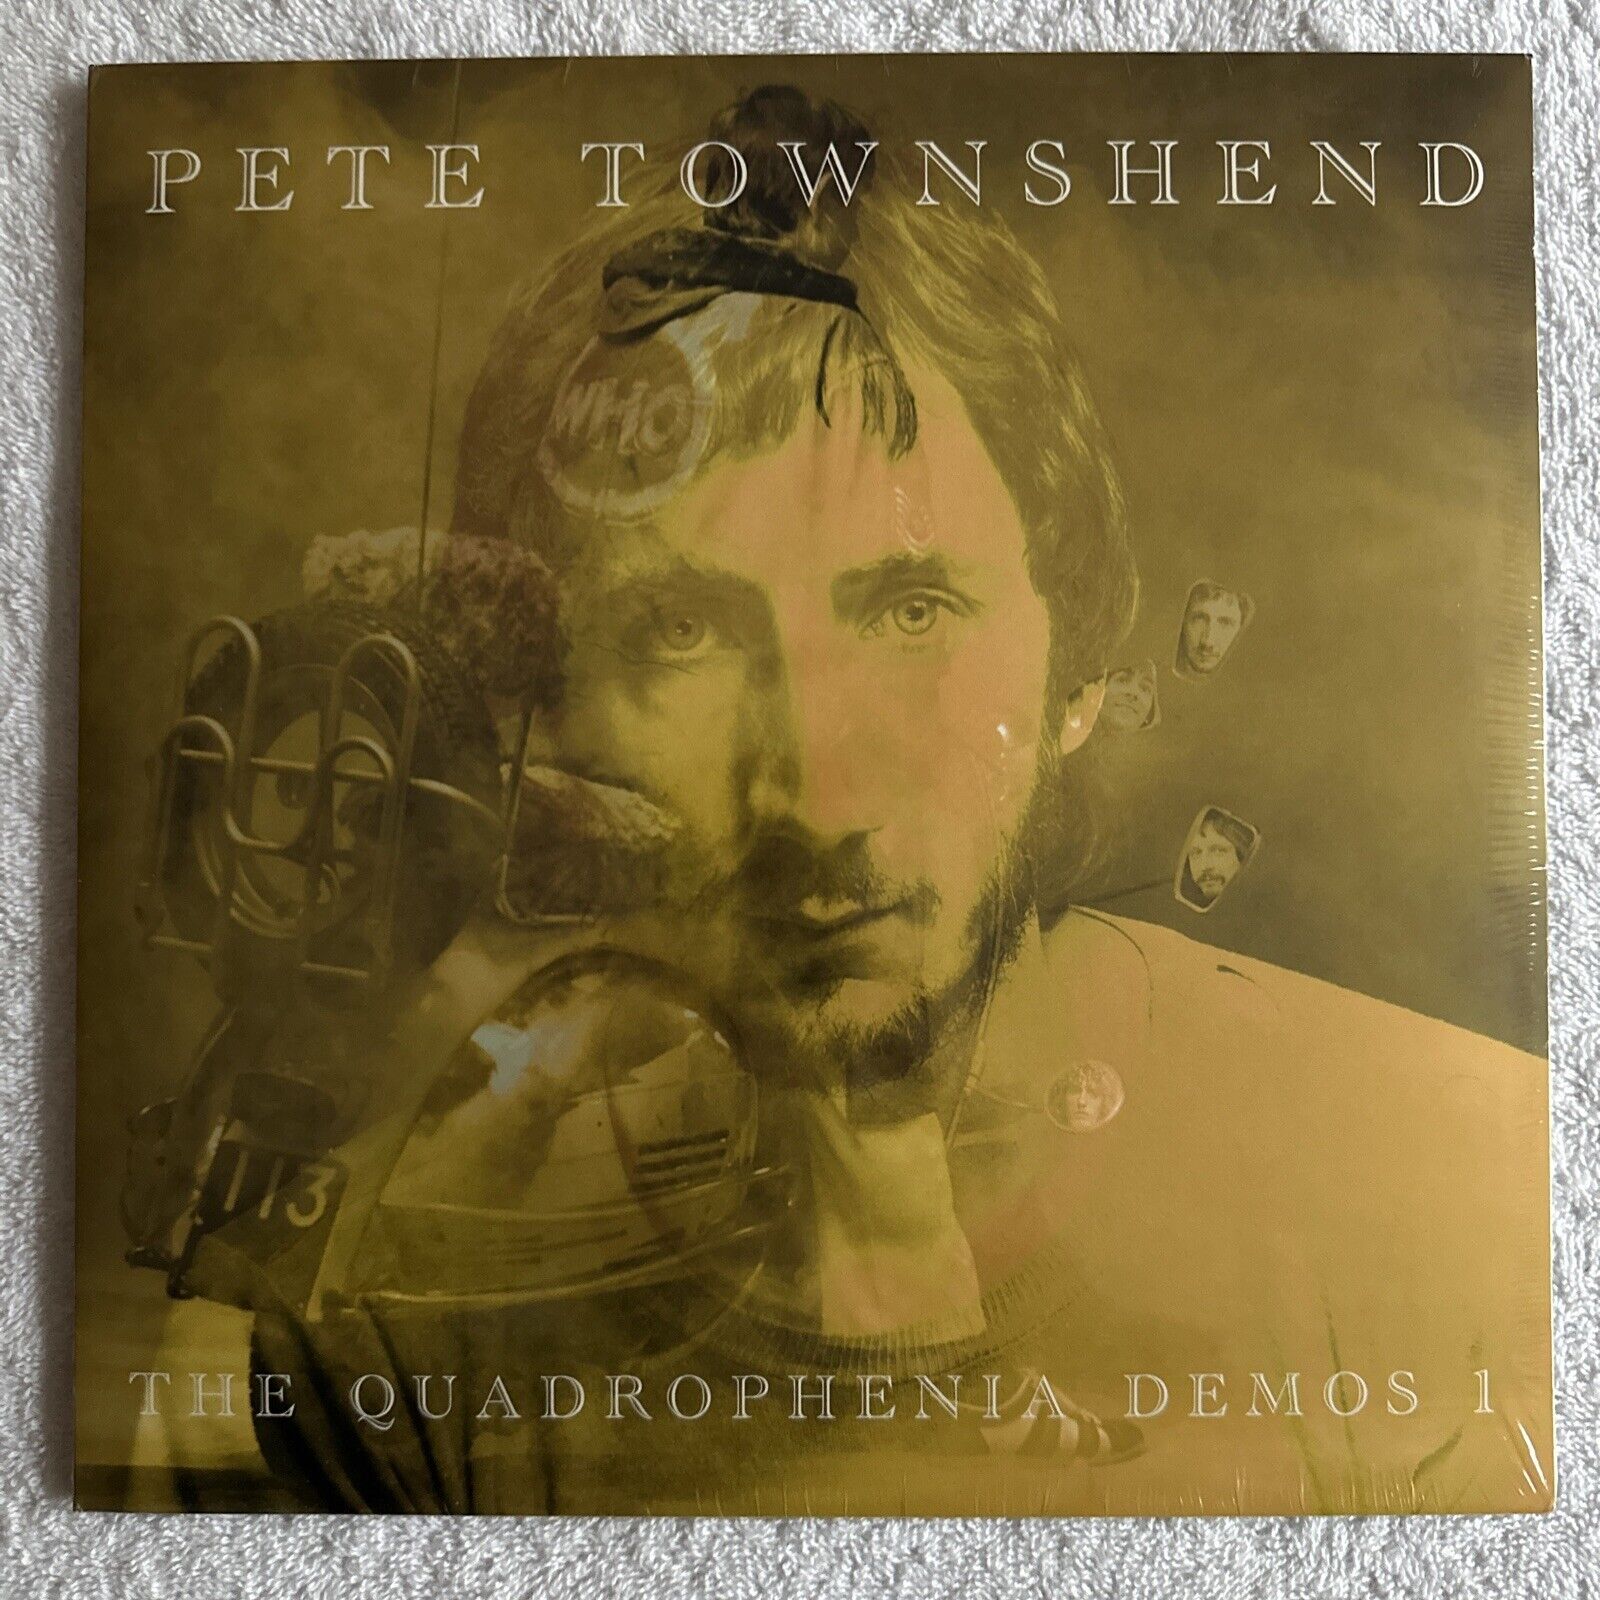 Pete Townshend Vinyl Record The Who Quadrophenia Demos EP